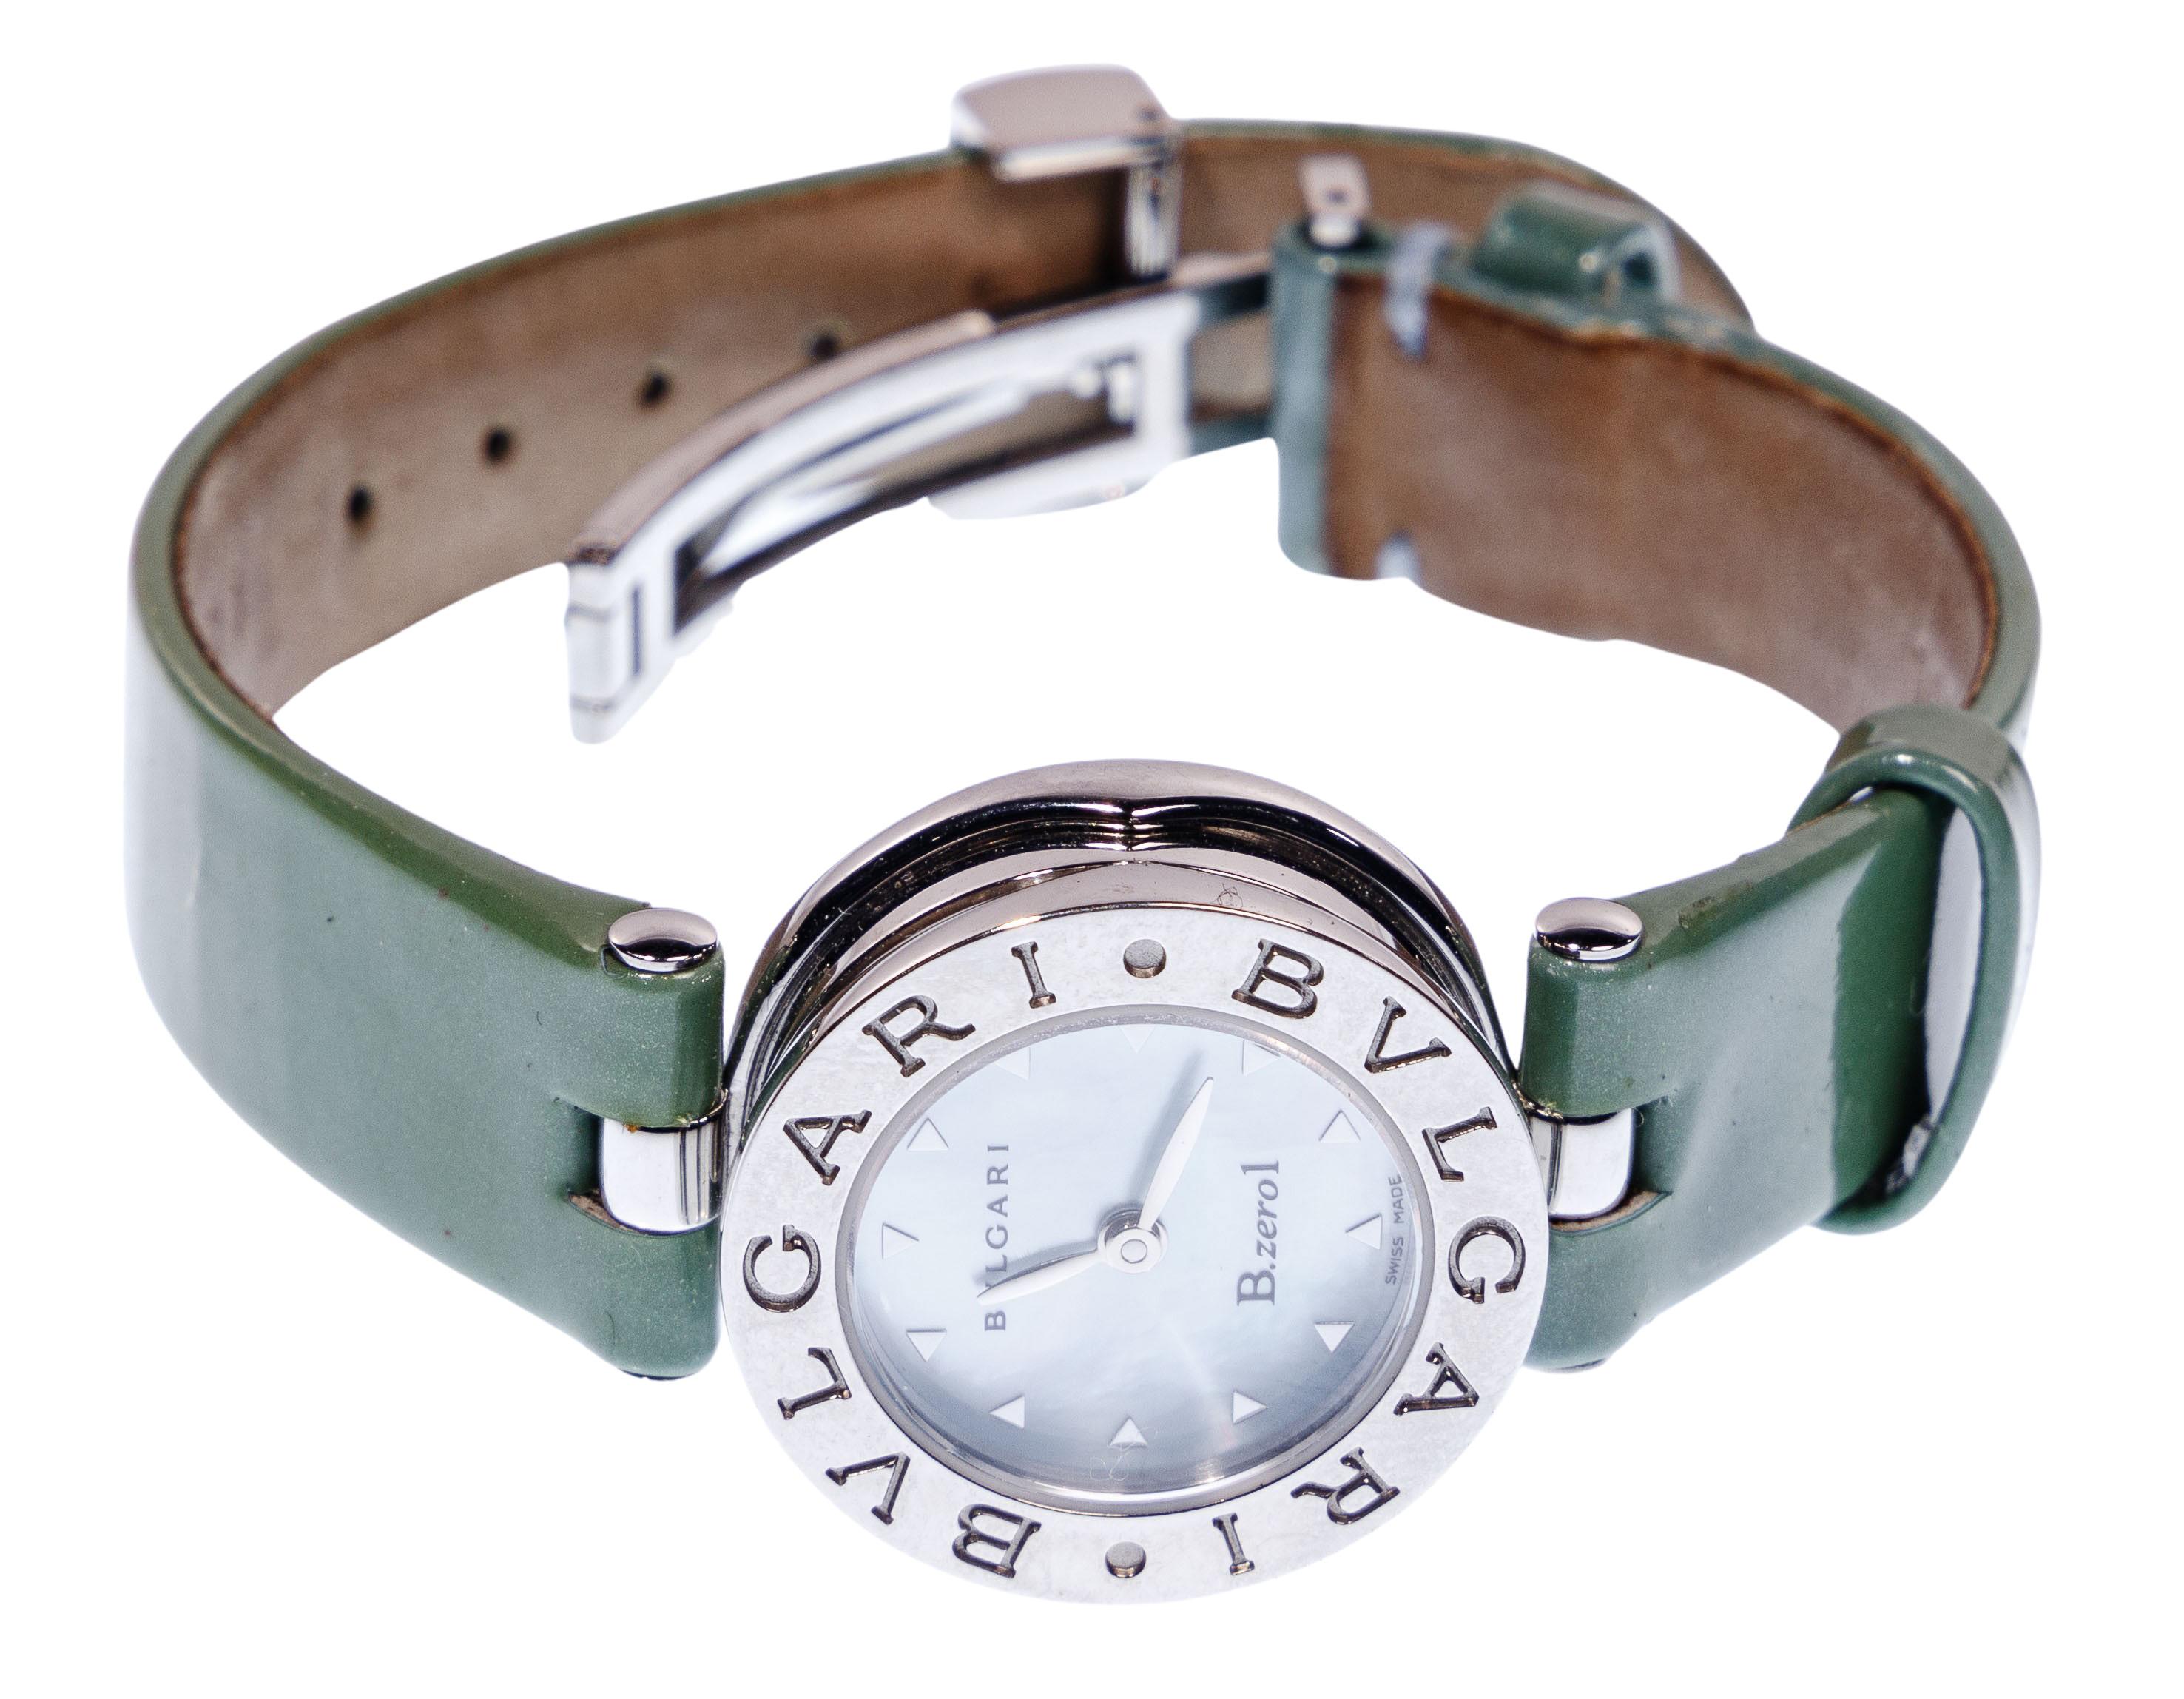 Designer Wristwatch Assortment